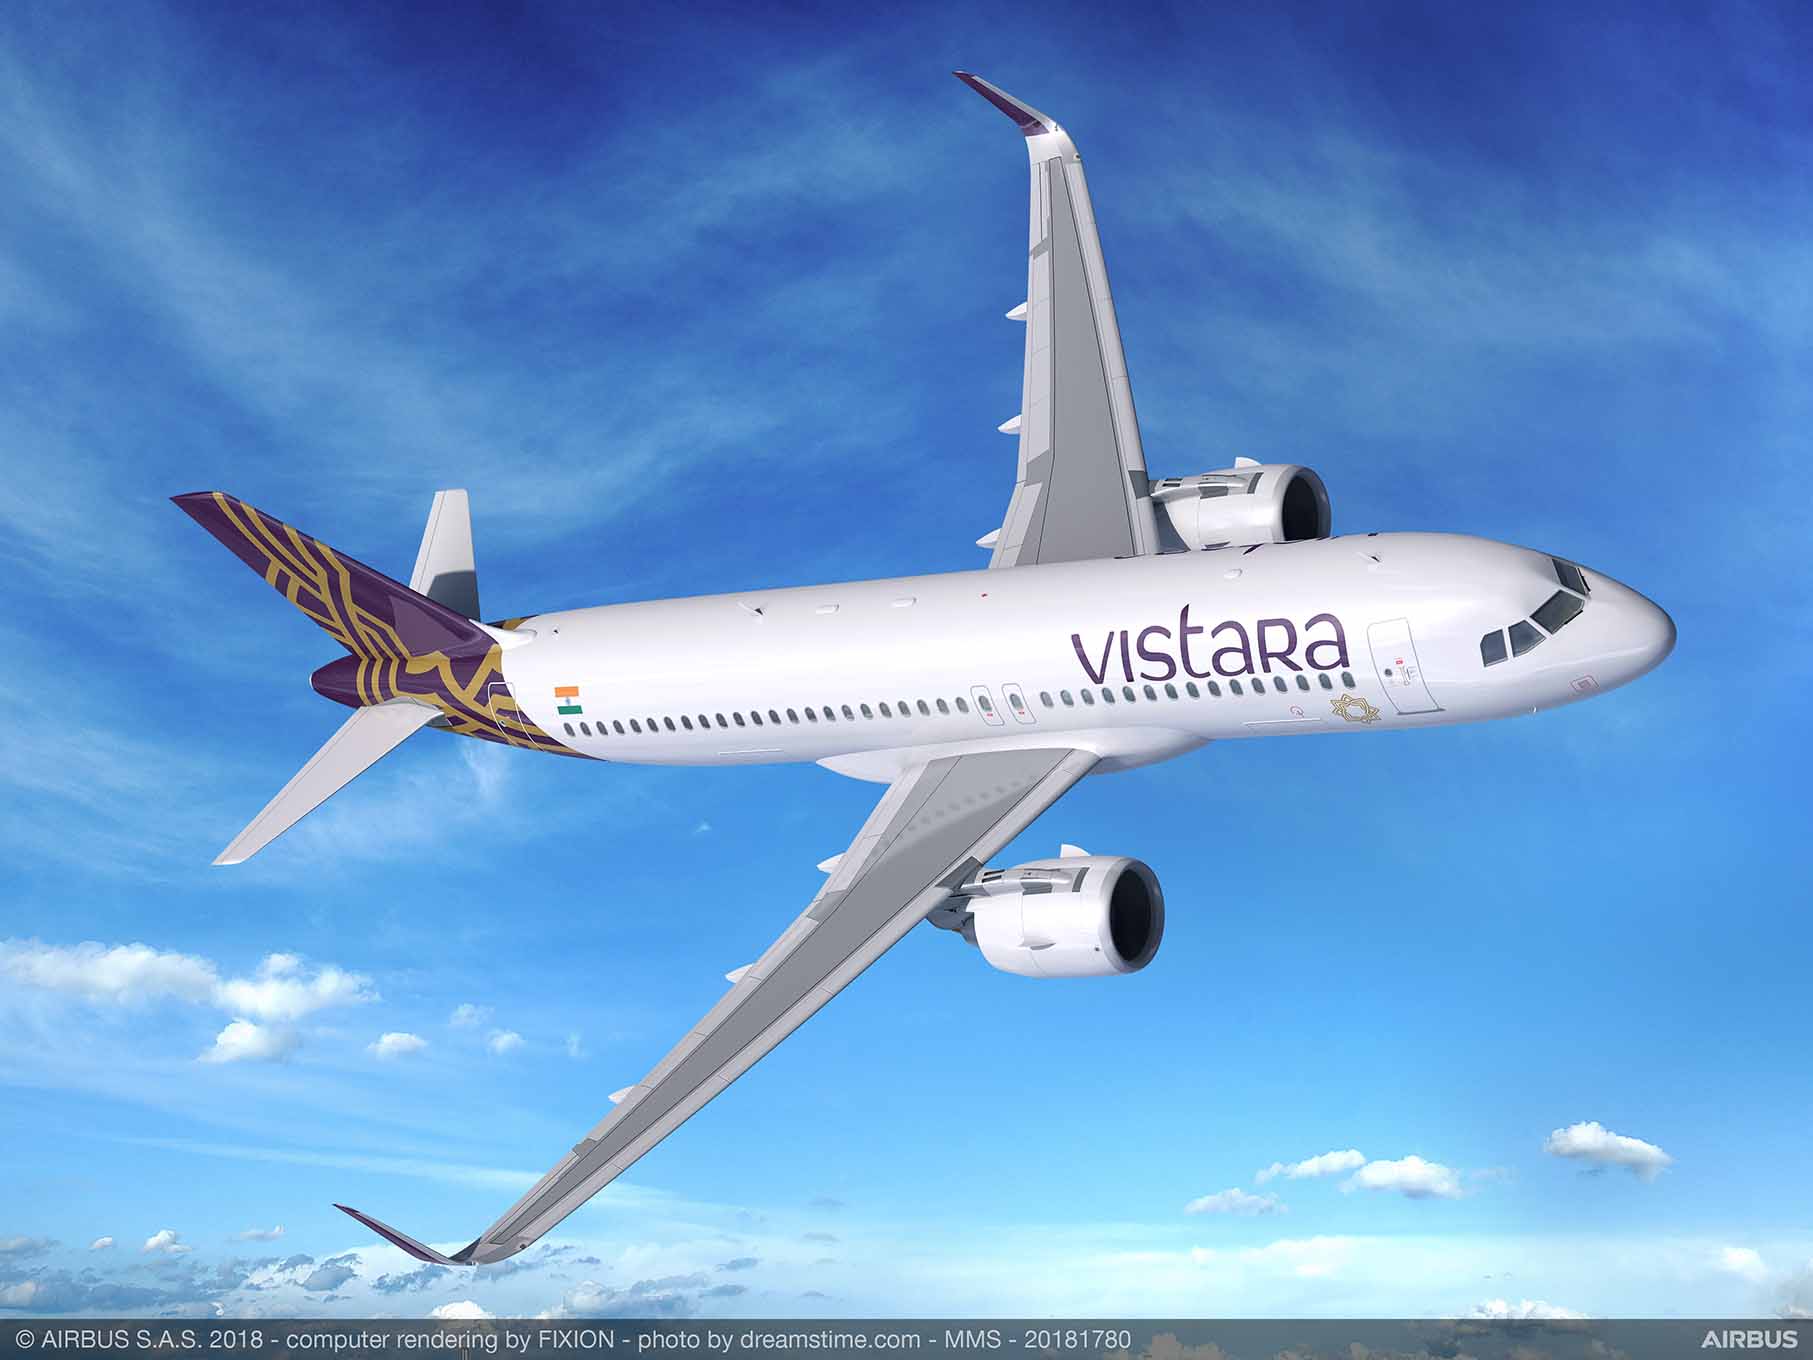 Vistara announces new domestic and international routes